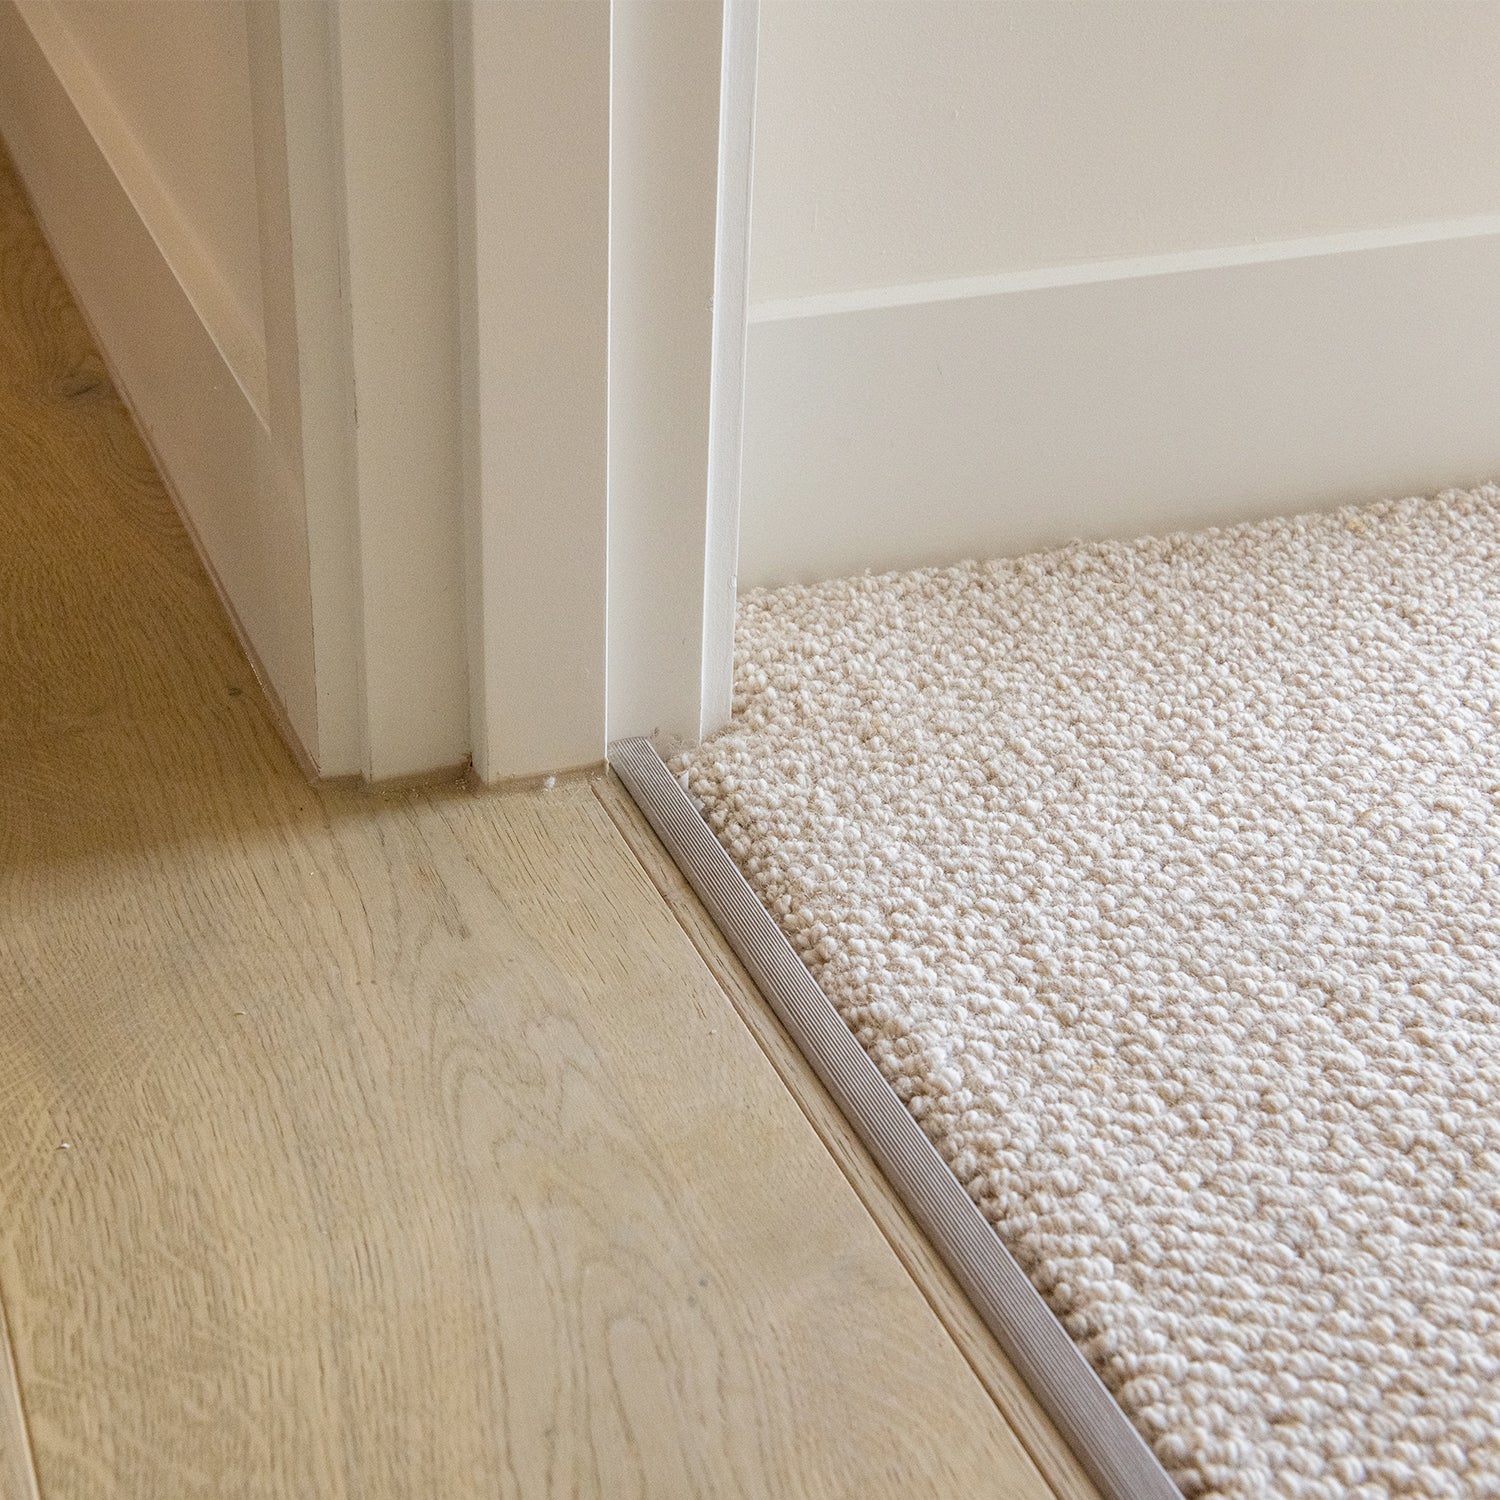 Bostik  TradeChoice Carpet & Flooring